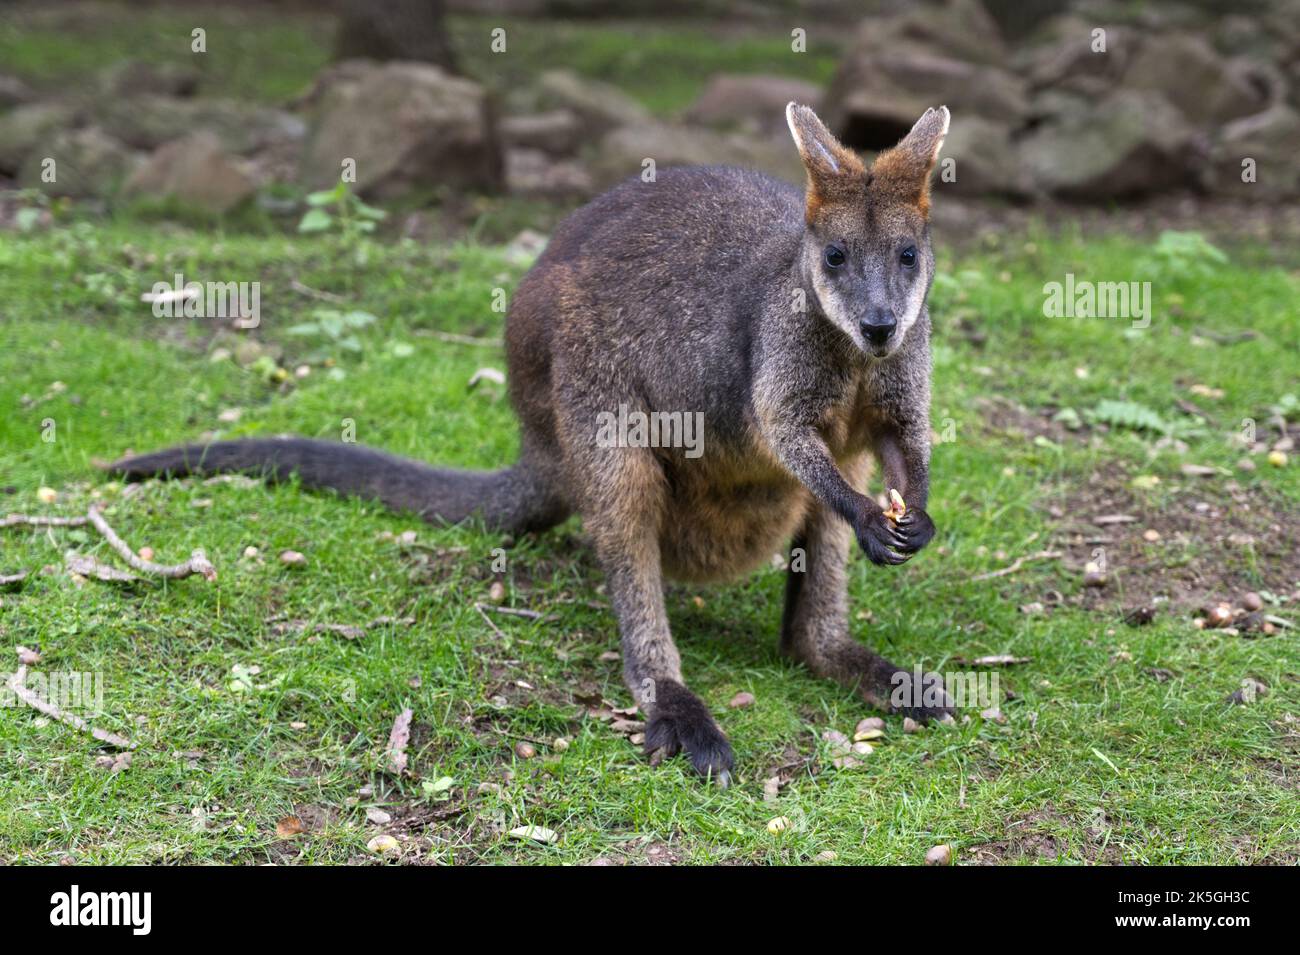 Wallaby the small kangaroo eating and sitting Stock Photo